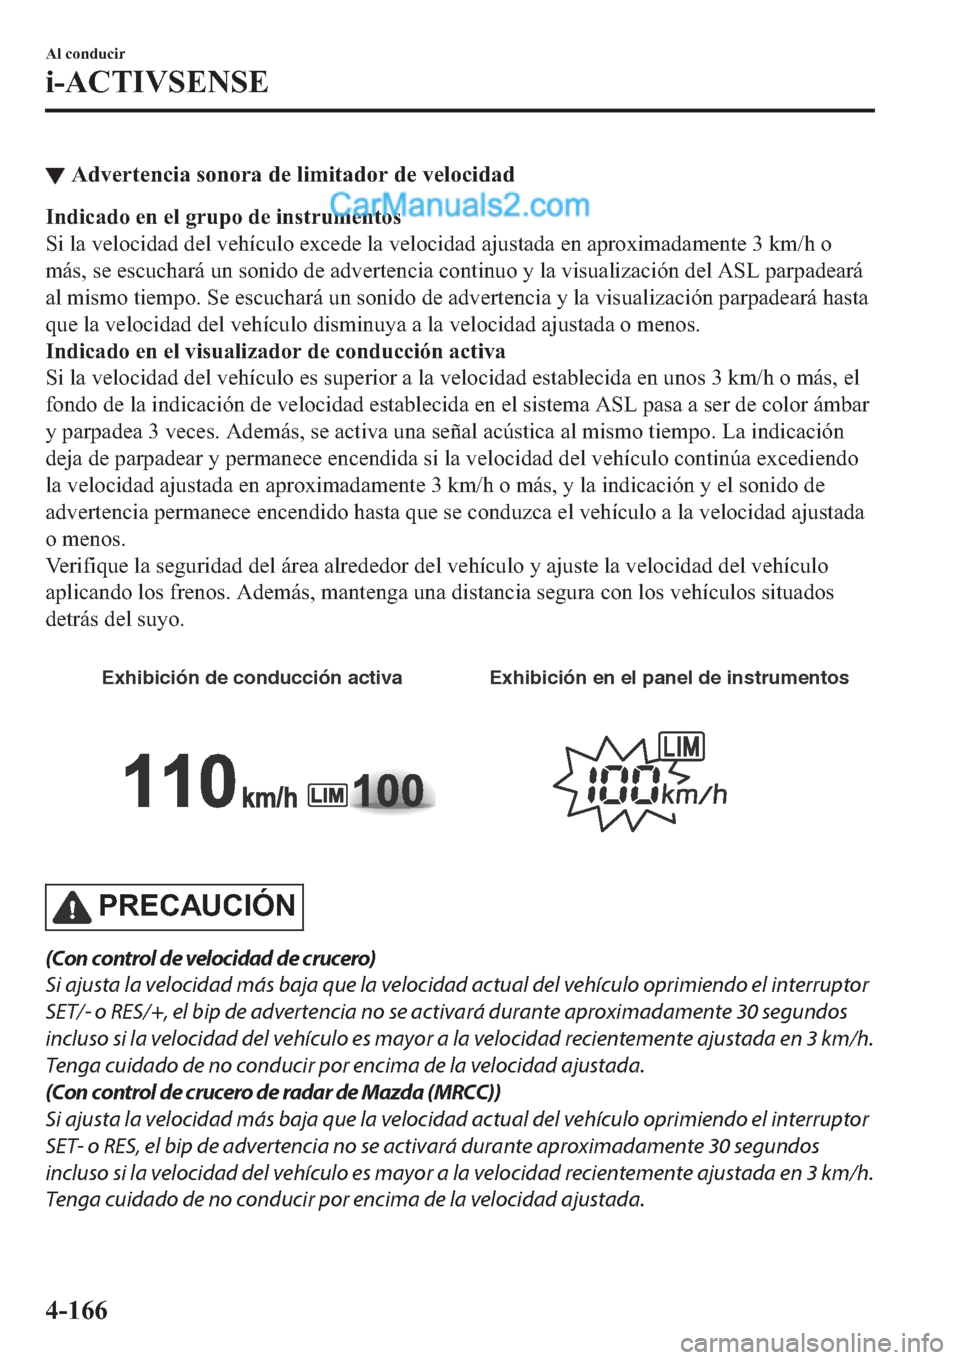 MAZDA MODEL 2 2019  Manual del propietario (in Spanish) ▼�$�G�Y�H�U�W�H�Q�F�L�D��V�R�Q�R�U�D��G�H��O�L�P�L�W�D�G�R�U��G�H��Y�H�O�R�F�L�G�D�G
�,�Q�G�L�F�D�G�R��H�Q��H�O��J�U�X�S�R��G�H��L�Q�V�W�U�X�P�H�Q�W�R�V
�6�L��O�D��Y�H�O�R�F�L�G�D�G��G�